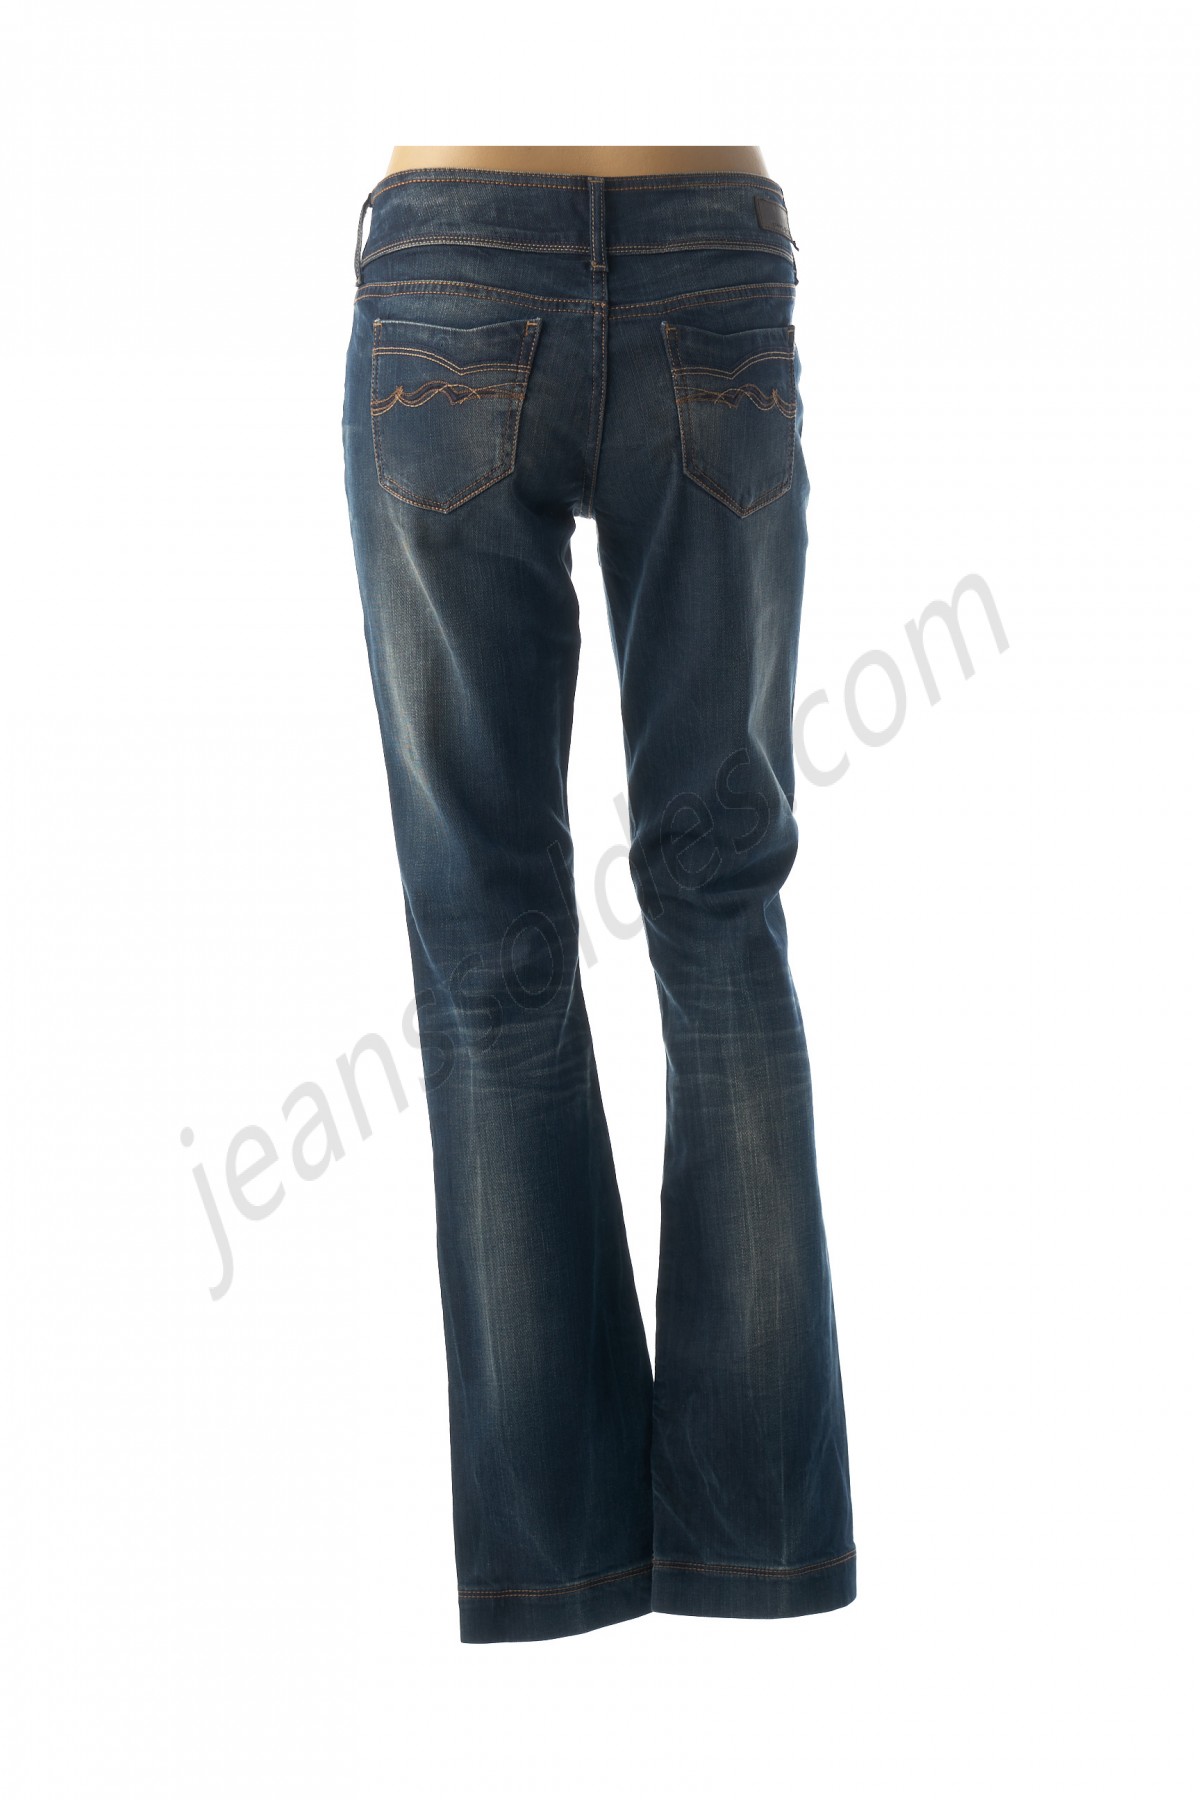 teddy smith-Jeans coupe droite prix d’amis - -1